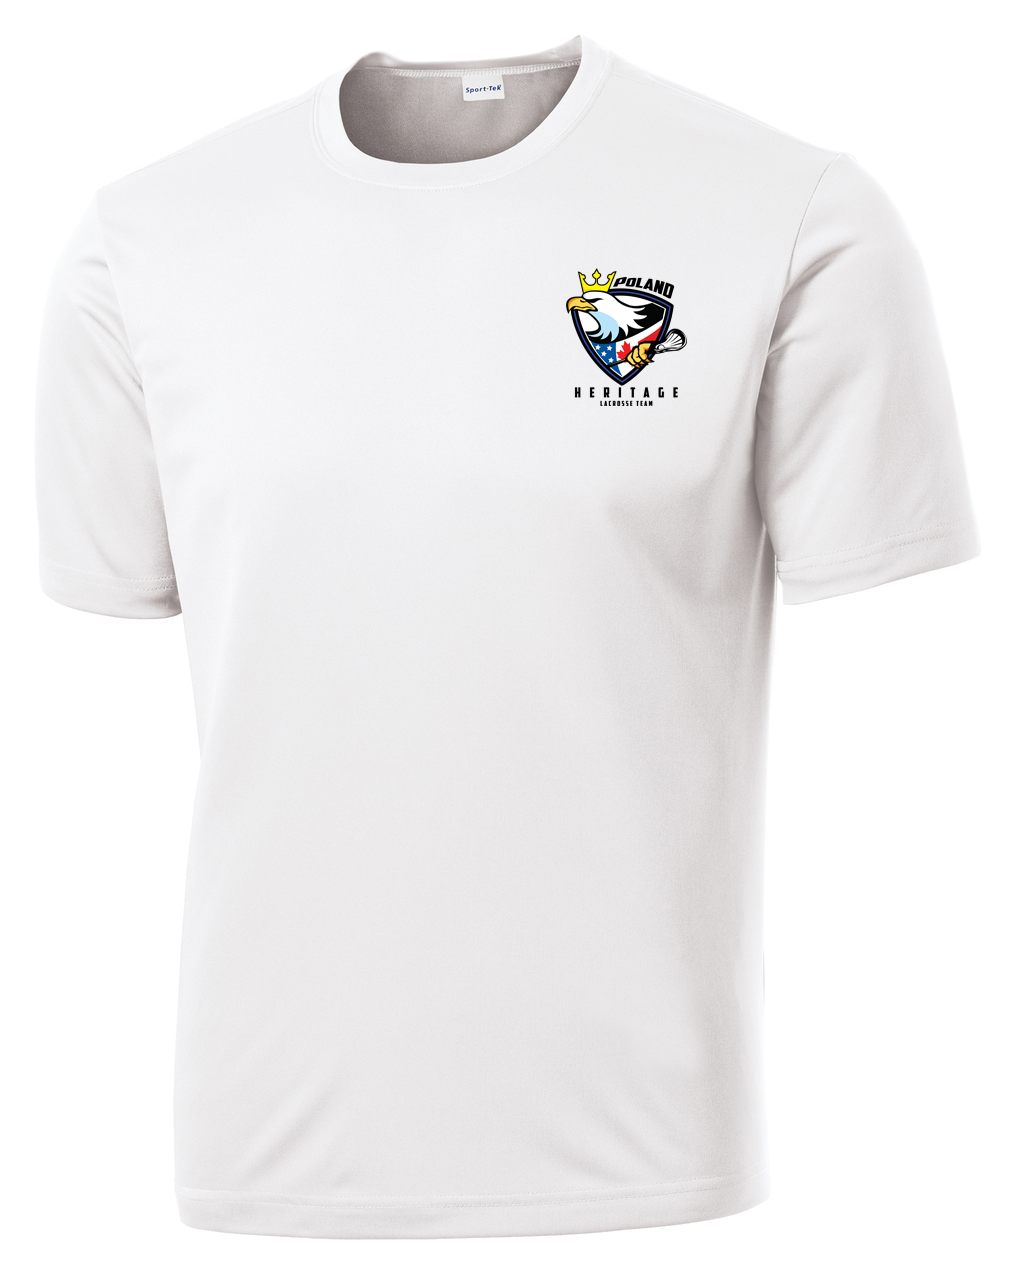 Poland Heritage Team White Performance T-Shirt